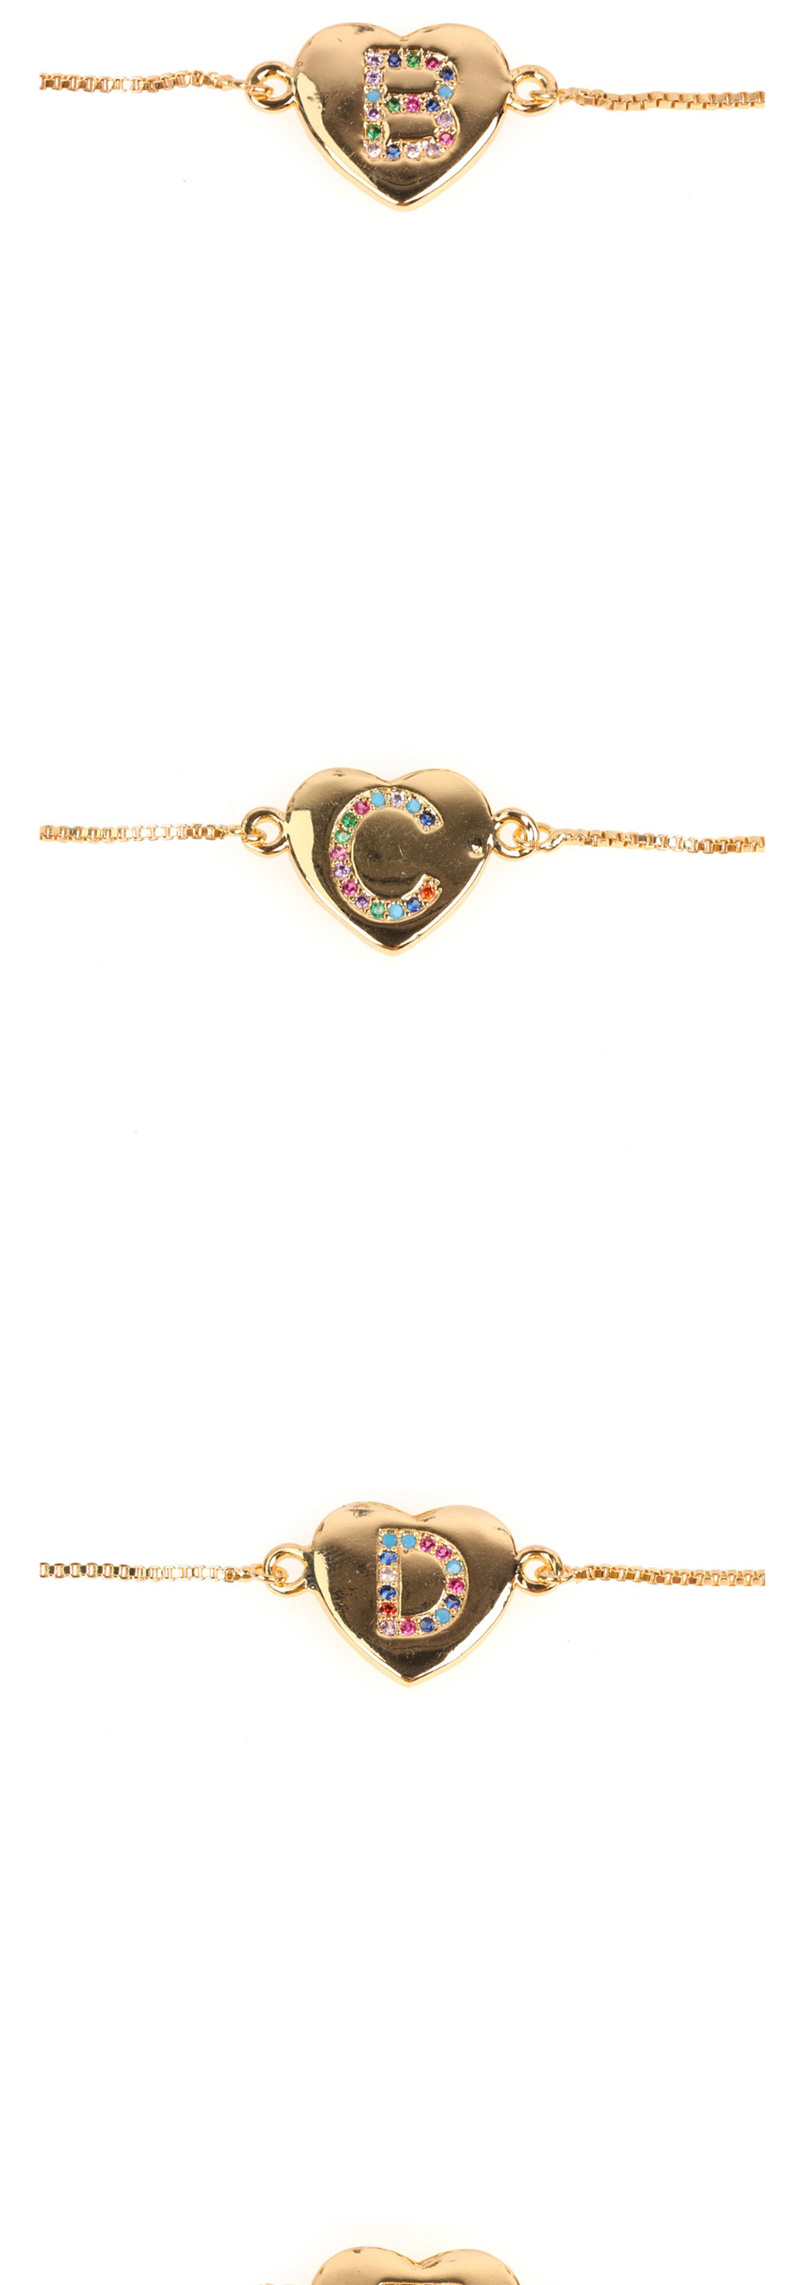 Fashion R Golden Heart Bracelet With Diamonds And Letters,Bracelets